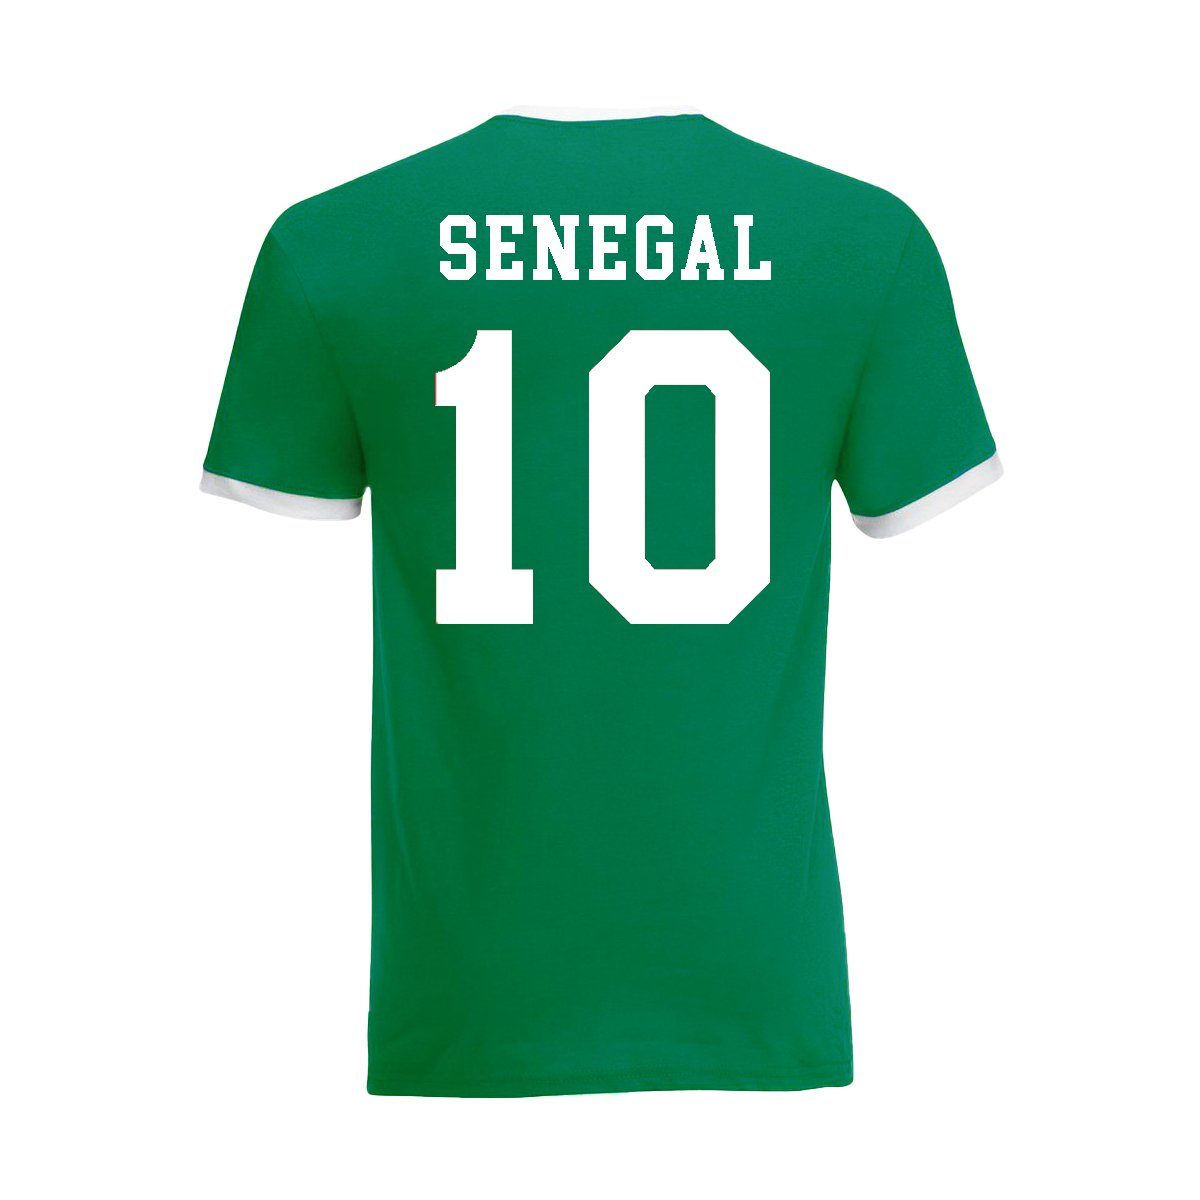 Designz Look Youth Trikot Senegal Herren im Shirt trendigem mit Fußball Motiv T-Shirt